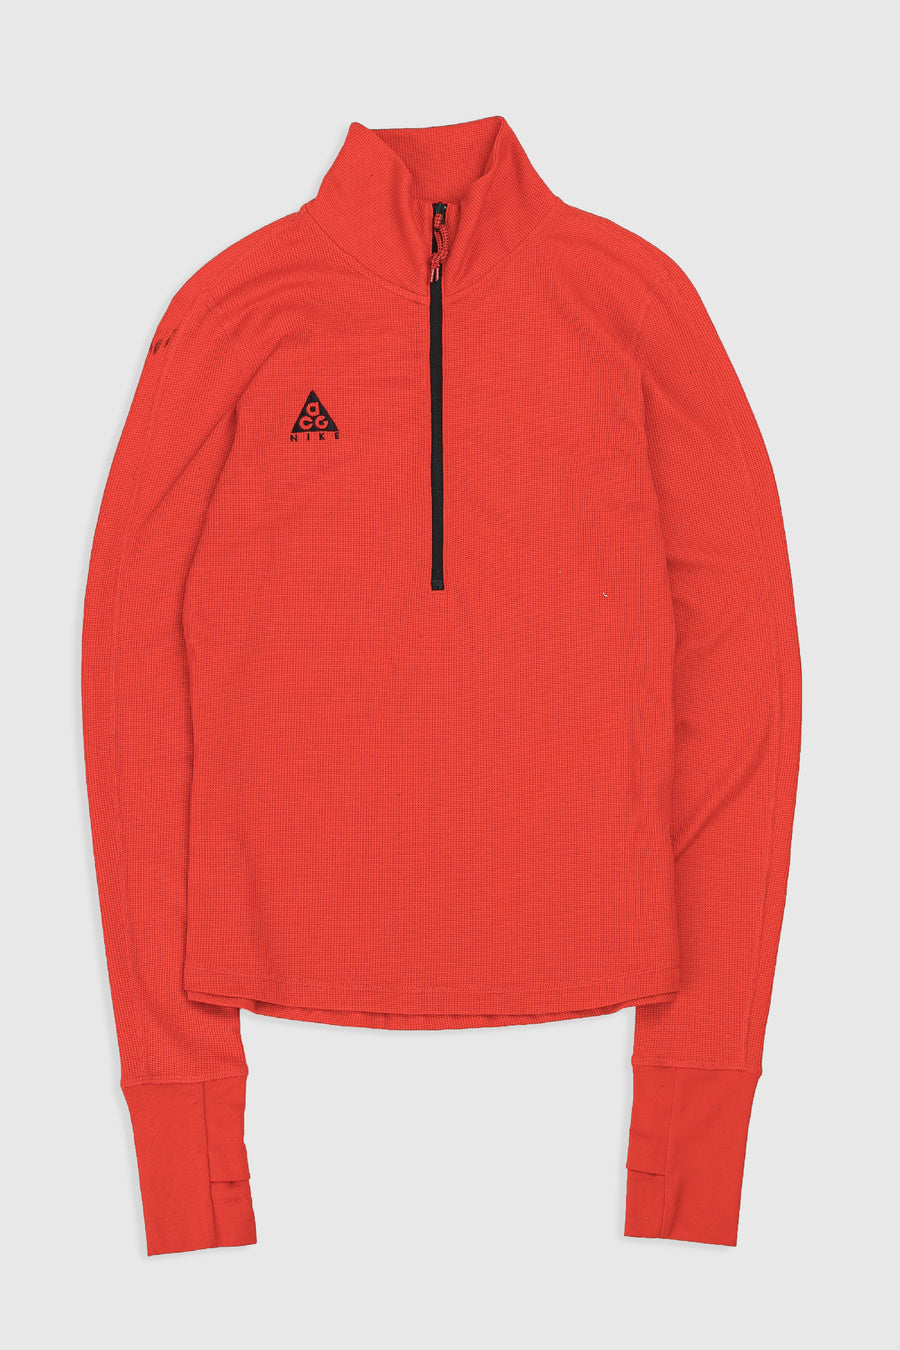 Vintage Nike ACG Sweater - M